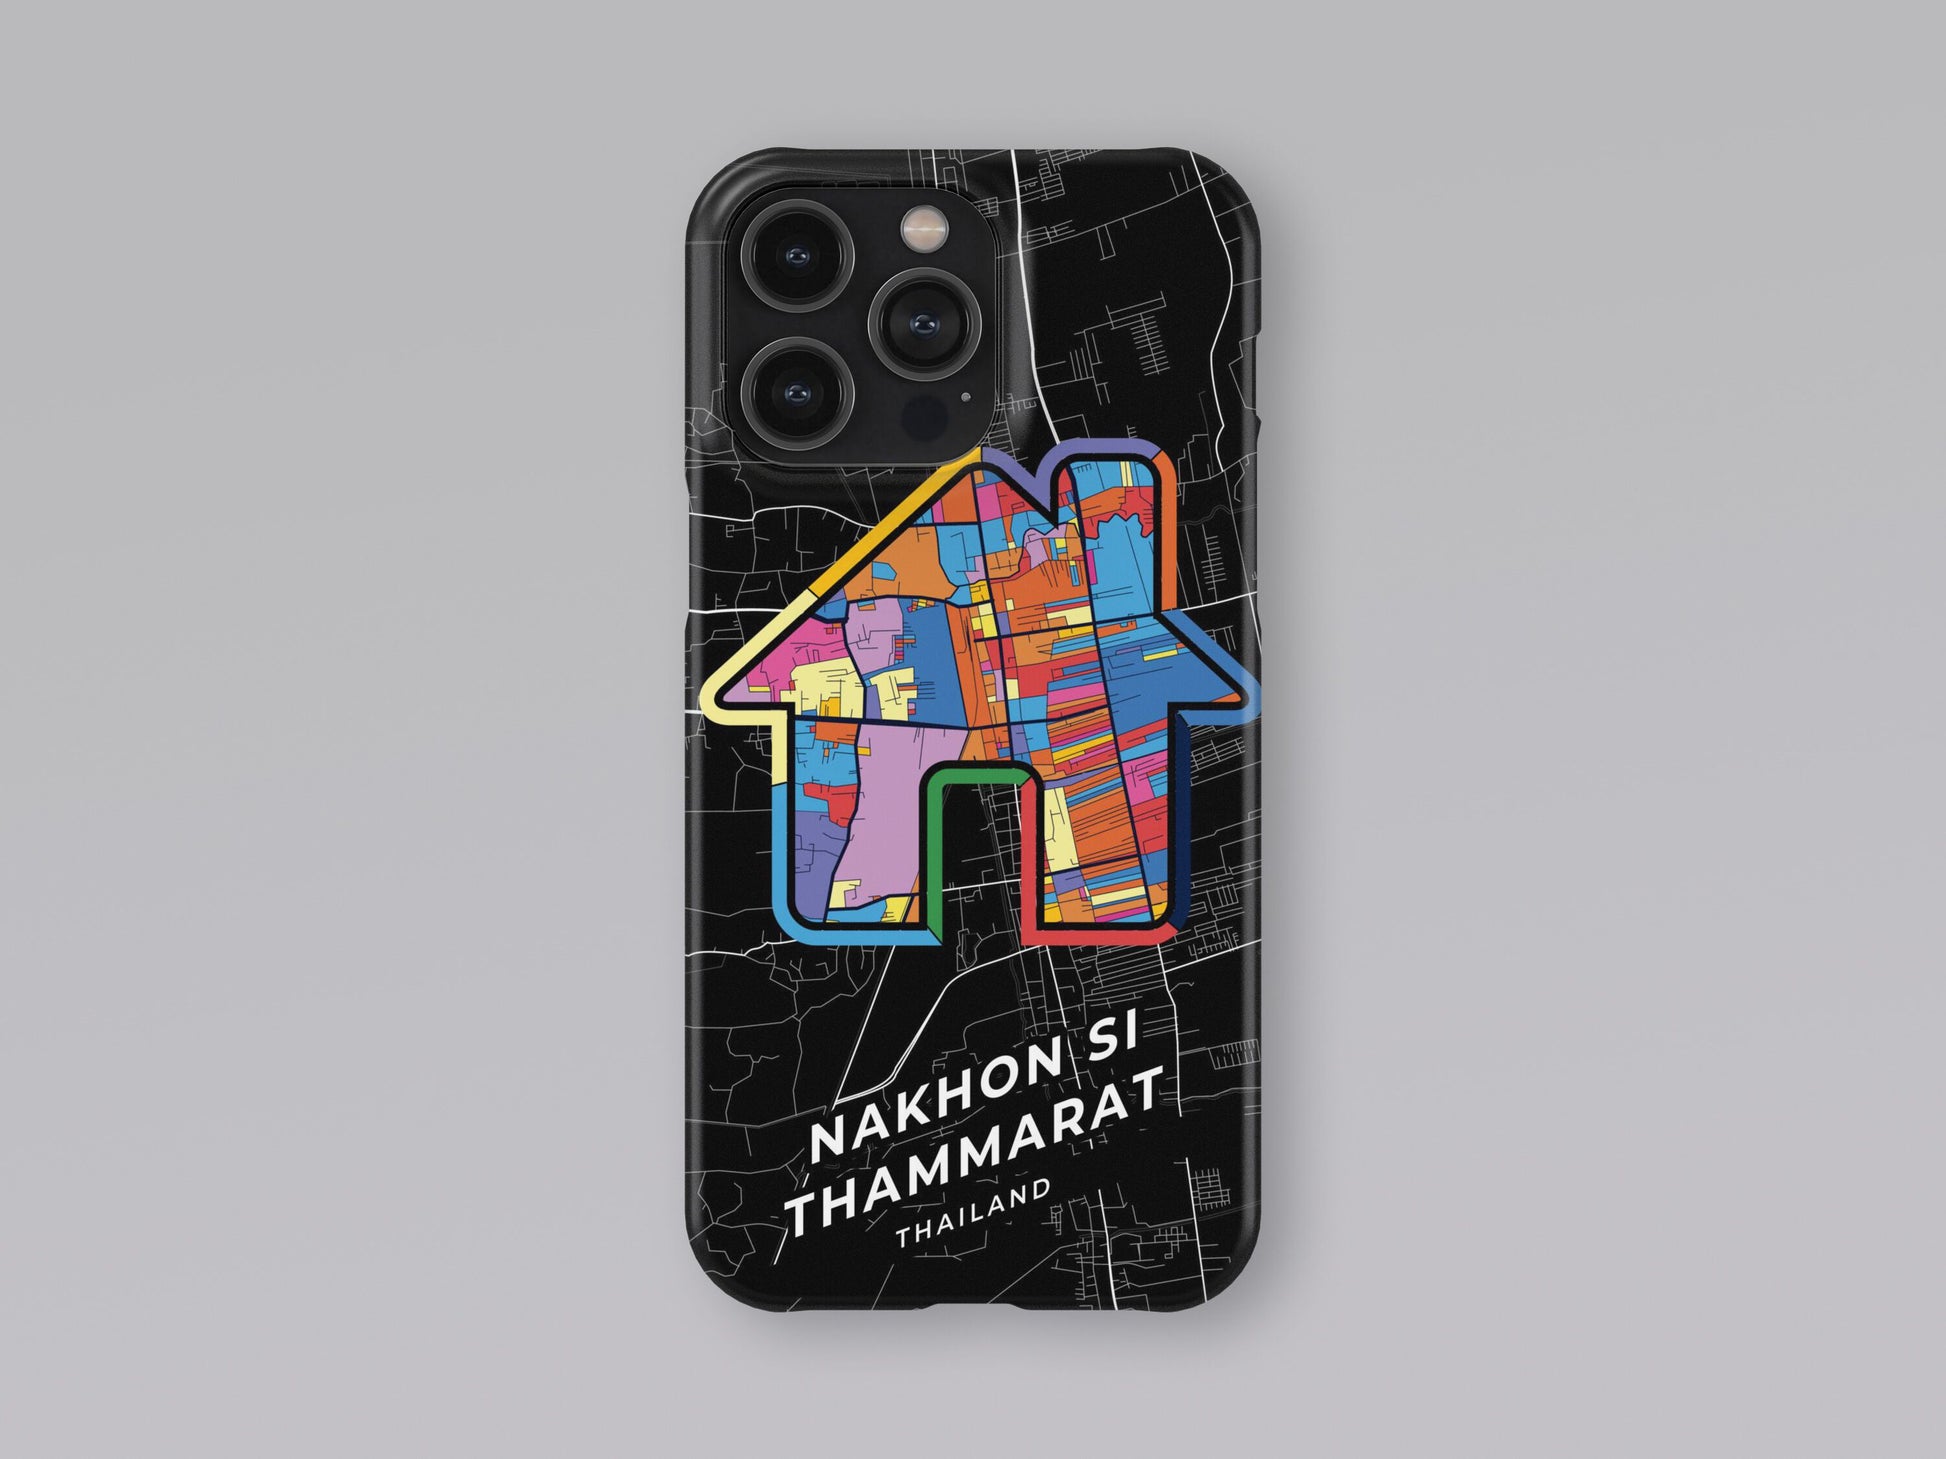 Nakhon Si Thammarat Thailand slim phone case with colorful icon 3